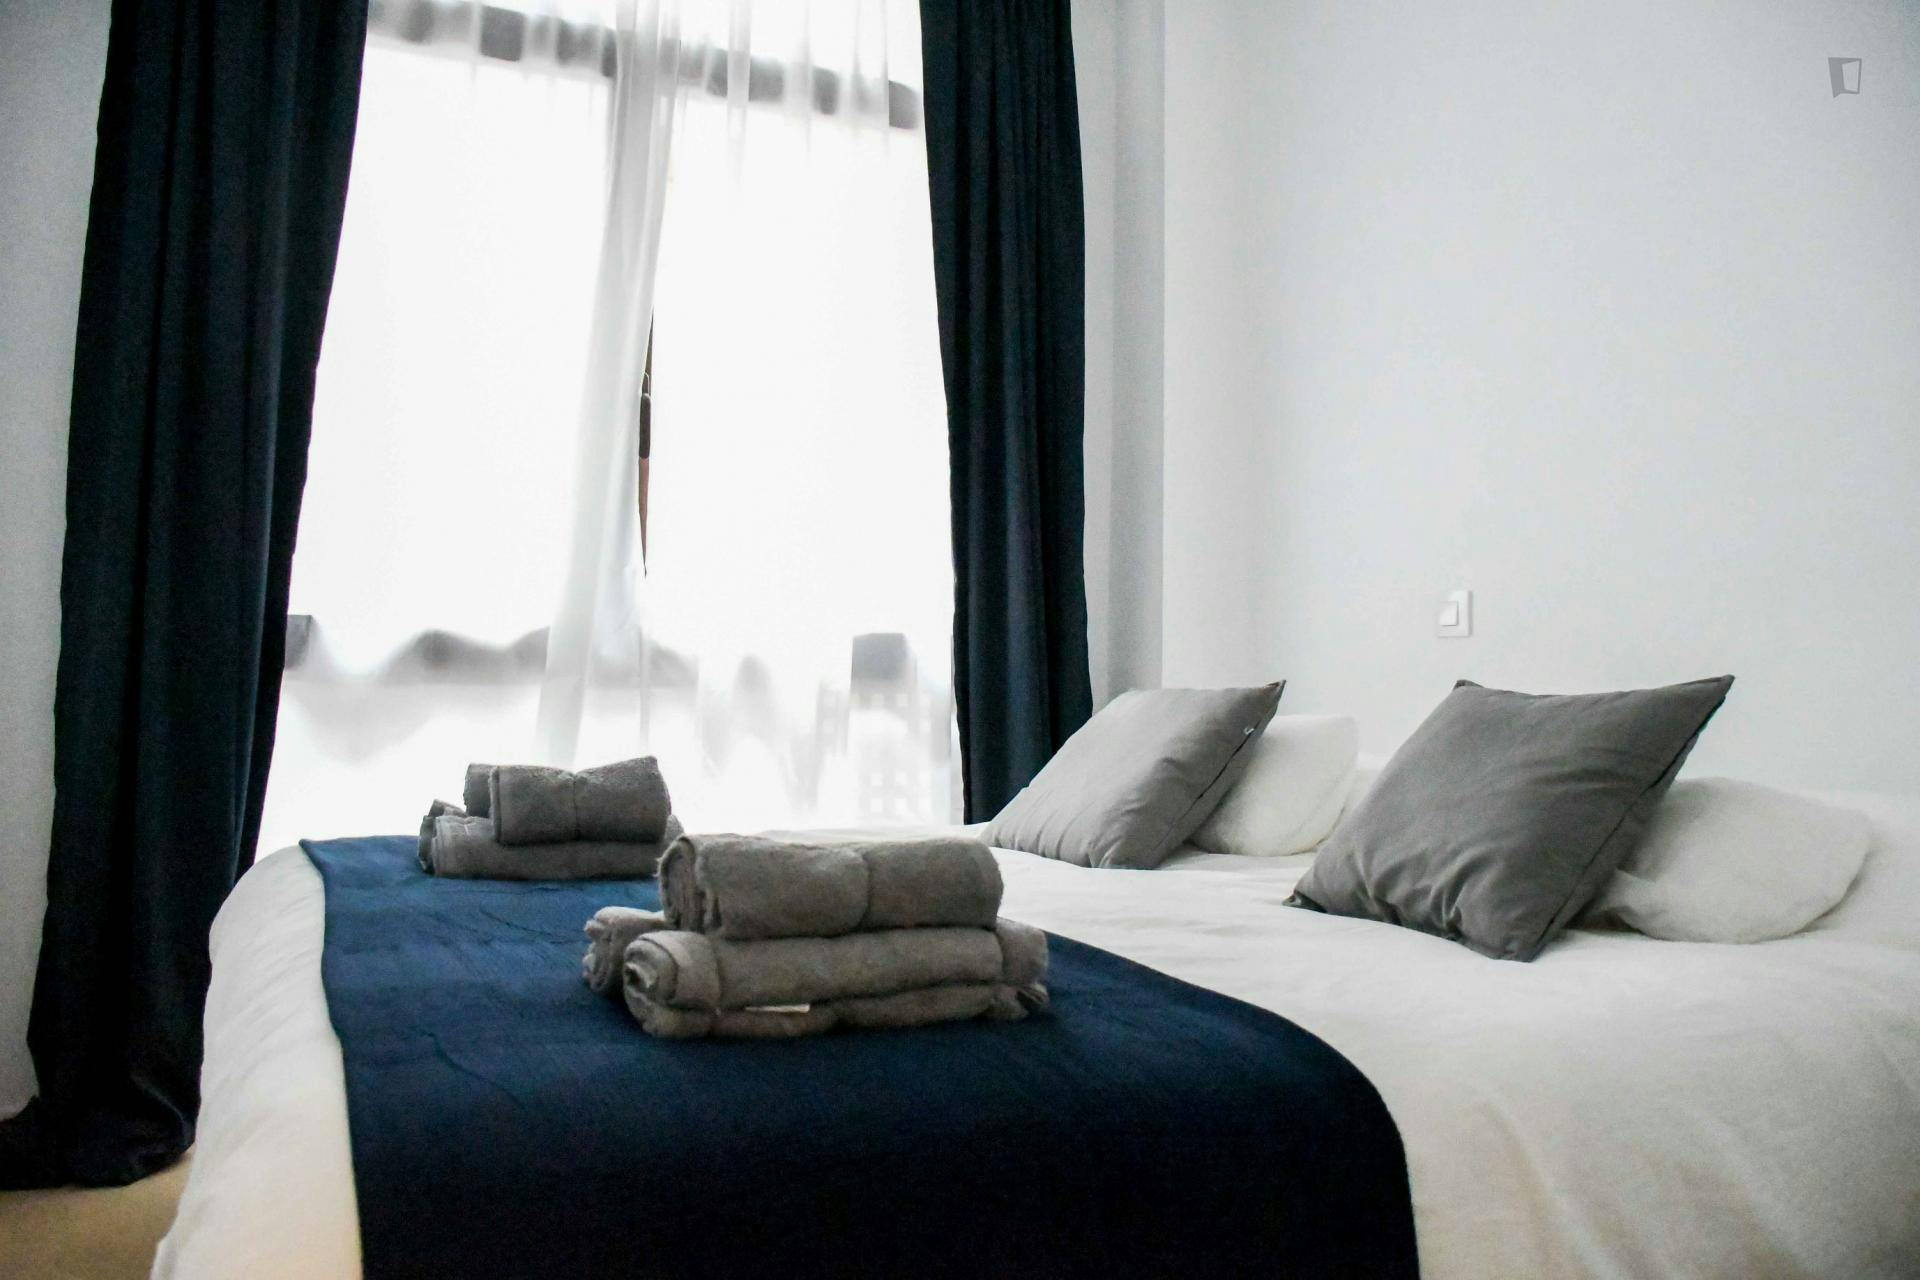 2-Bedroom apartment near Vallcarca metro station